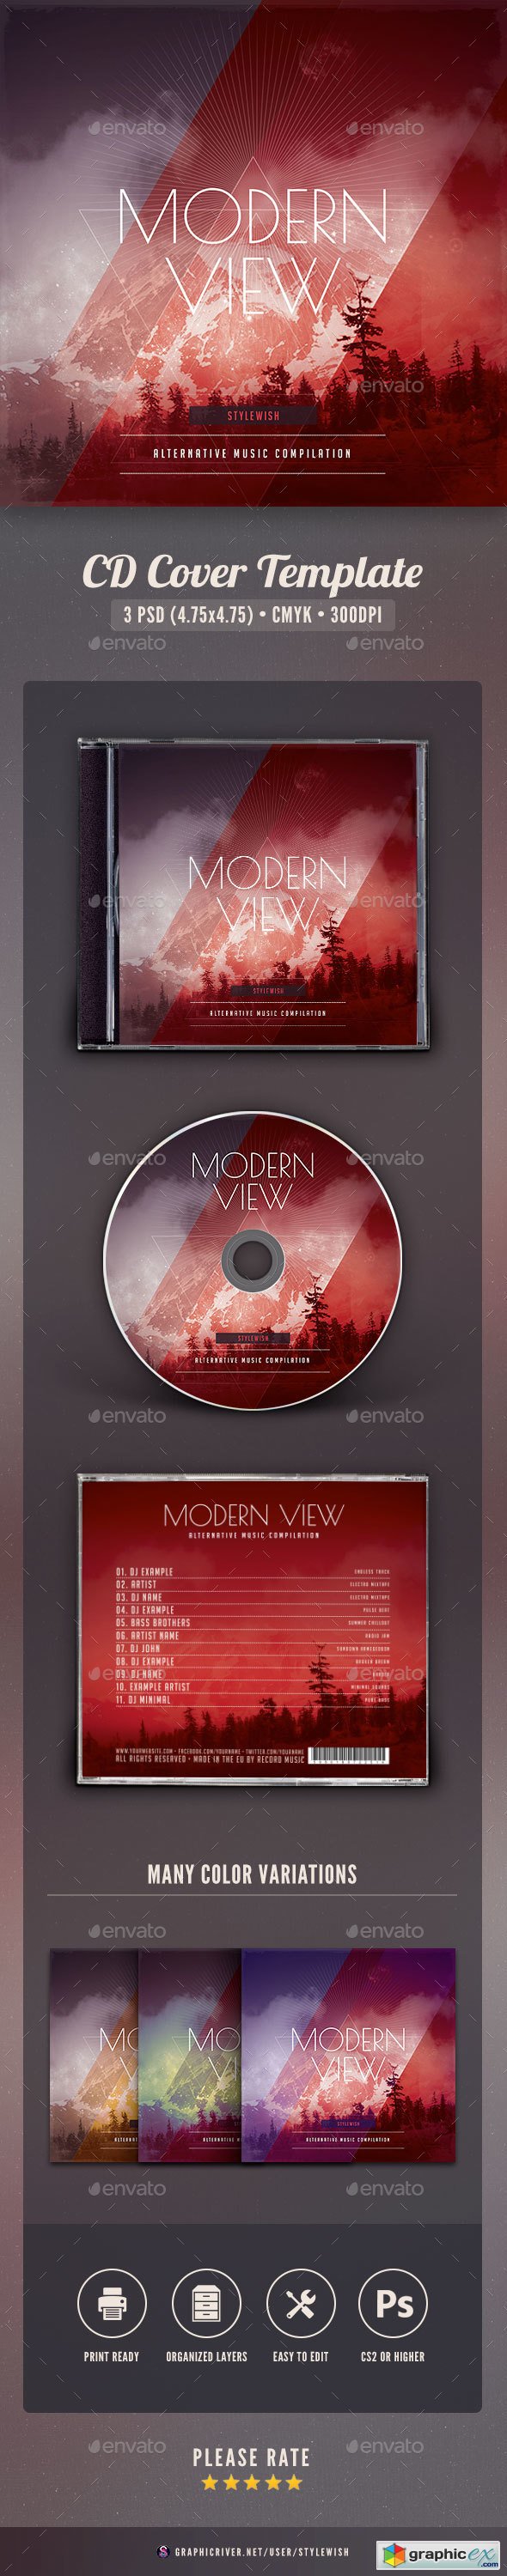 Modern View CD Cover Artwork